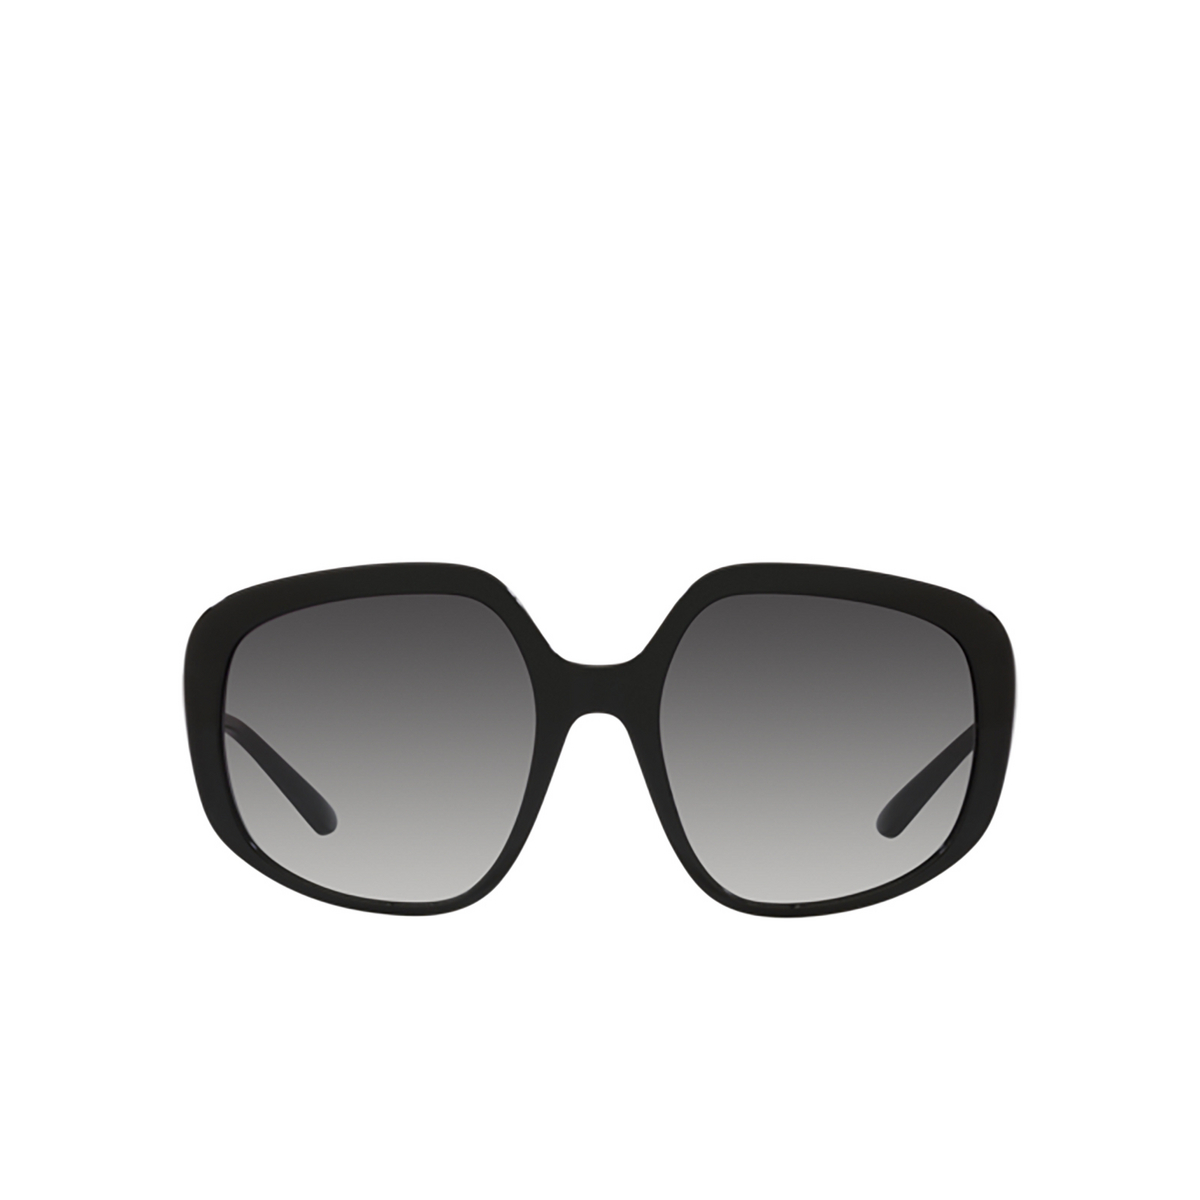 Dolce & Gabbana DG4421 Sunglasses 501/8G Black - front view